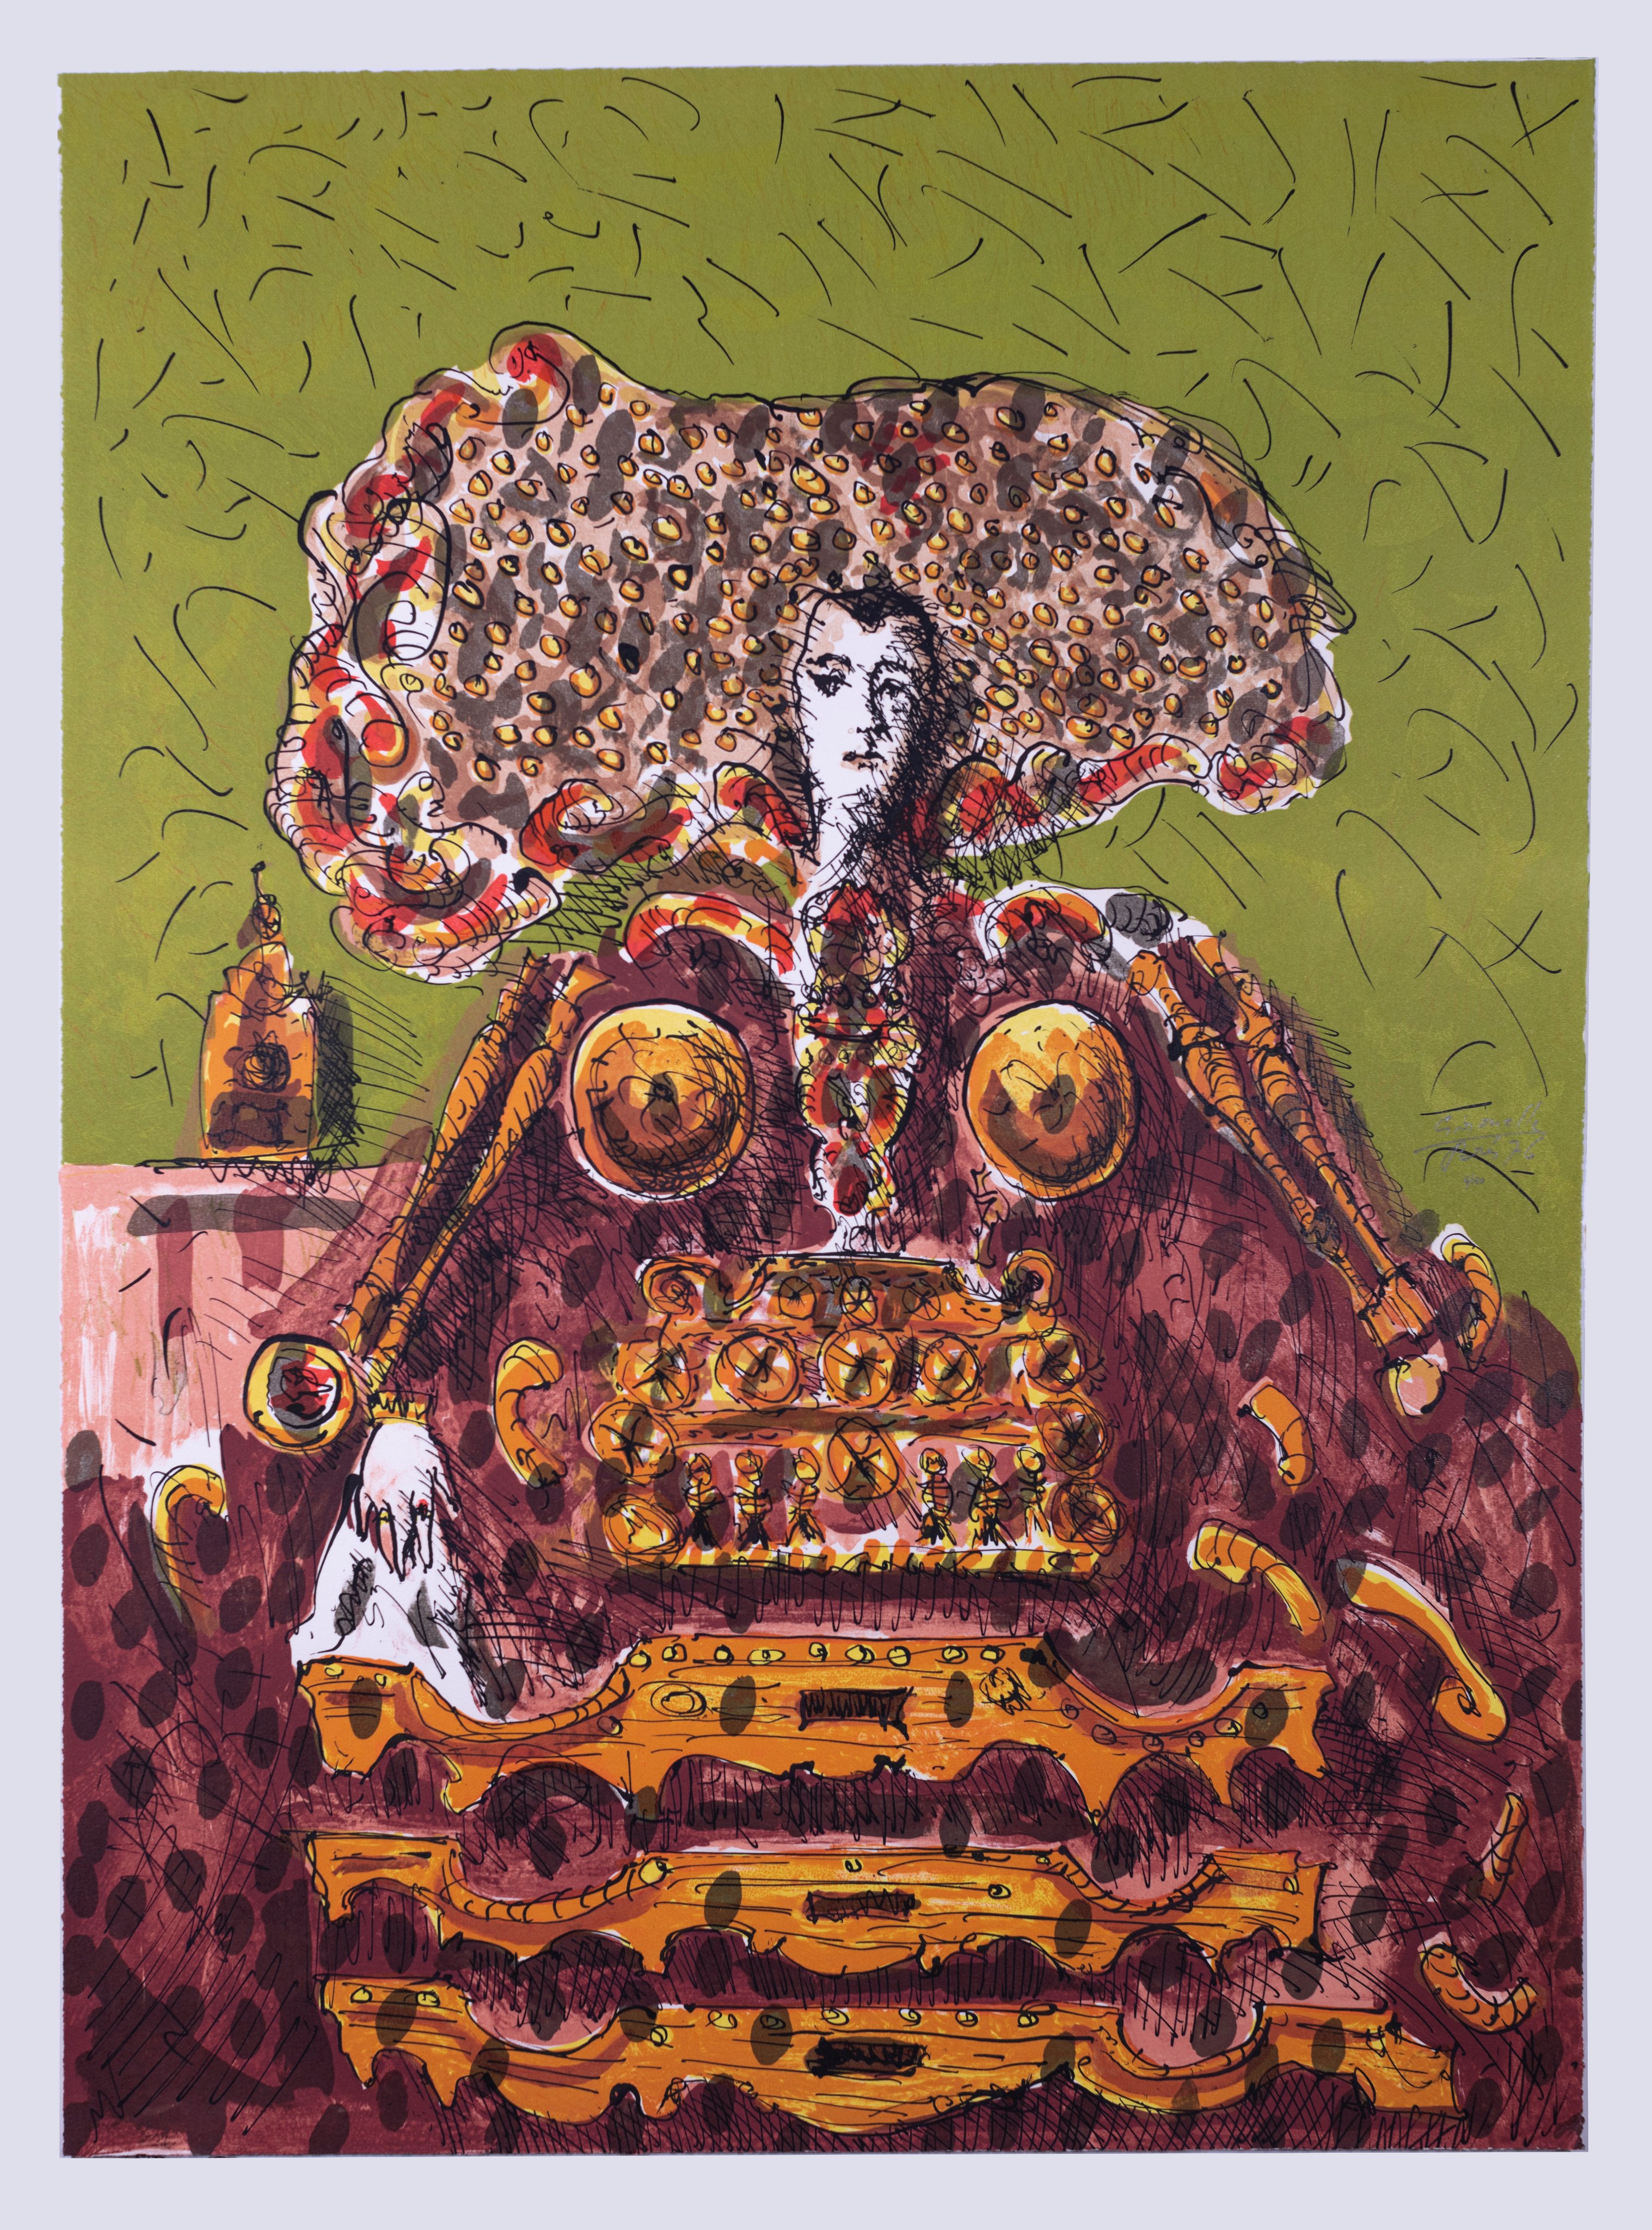 Art Museum of the Americas on X: Alberto Gironella, La reina de yugos,  1976 @MisionMexOEA @OAS_official @OEA_oficial @JMLambert1 @adrianaospinaj  #AMAatHome #AMAenCasa #EnContrastes #OfContrasts #AMAMexico #OEAMexico   / X